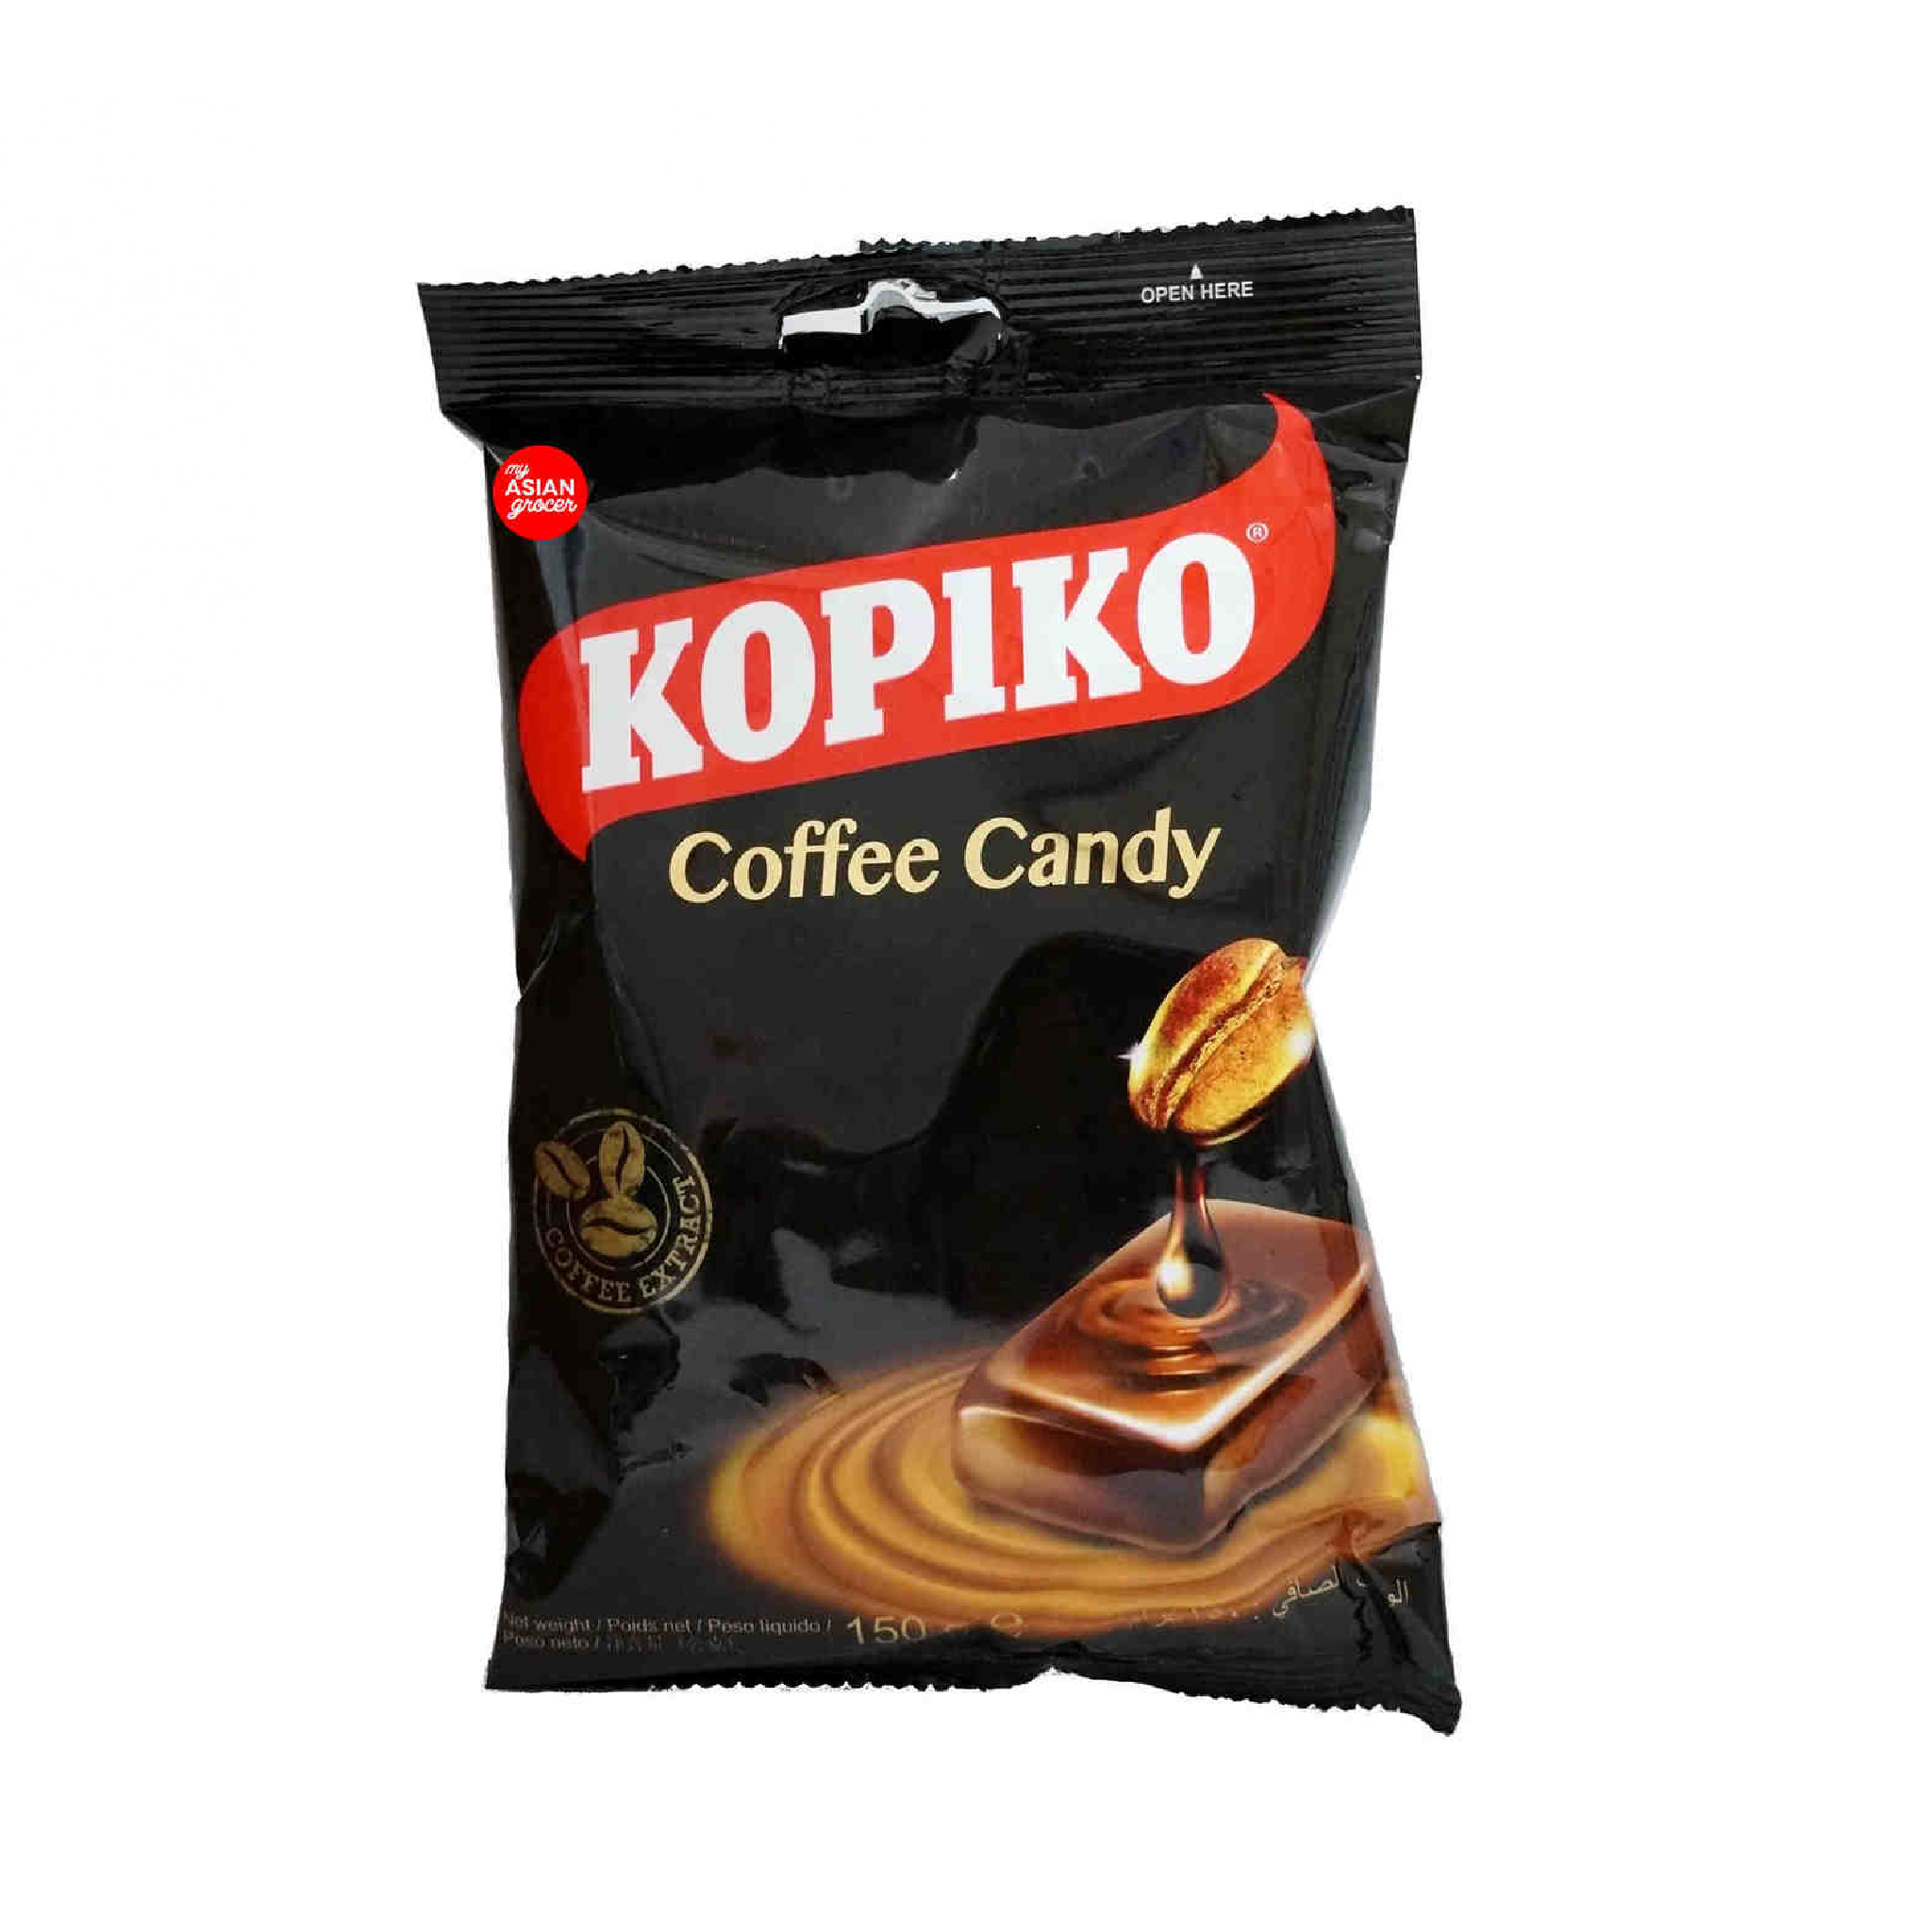 Копико кофе. Kopiko Винченцо. Леденцы Kopiko. Kopiko Coffee Candy 108. Купить конфеты кофе канди